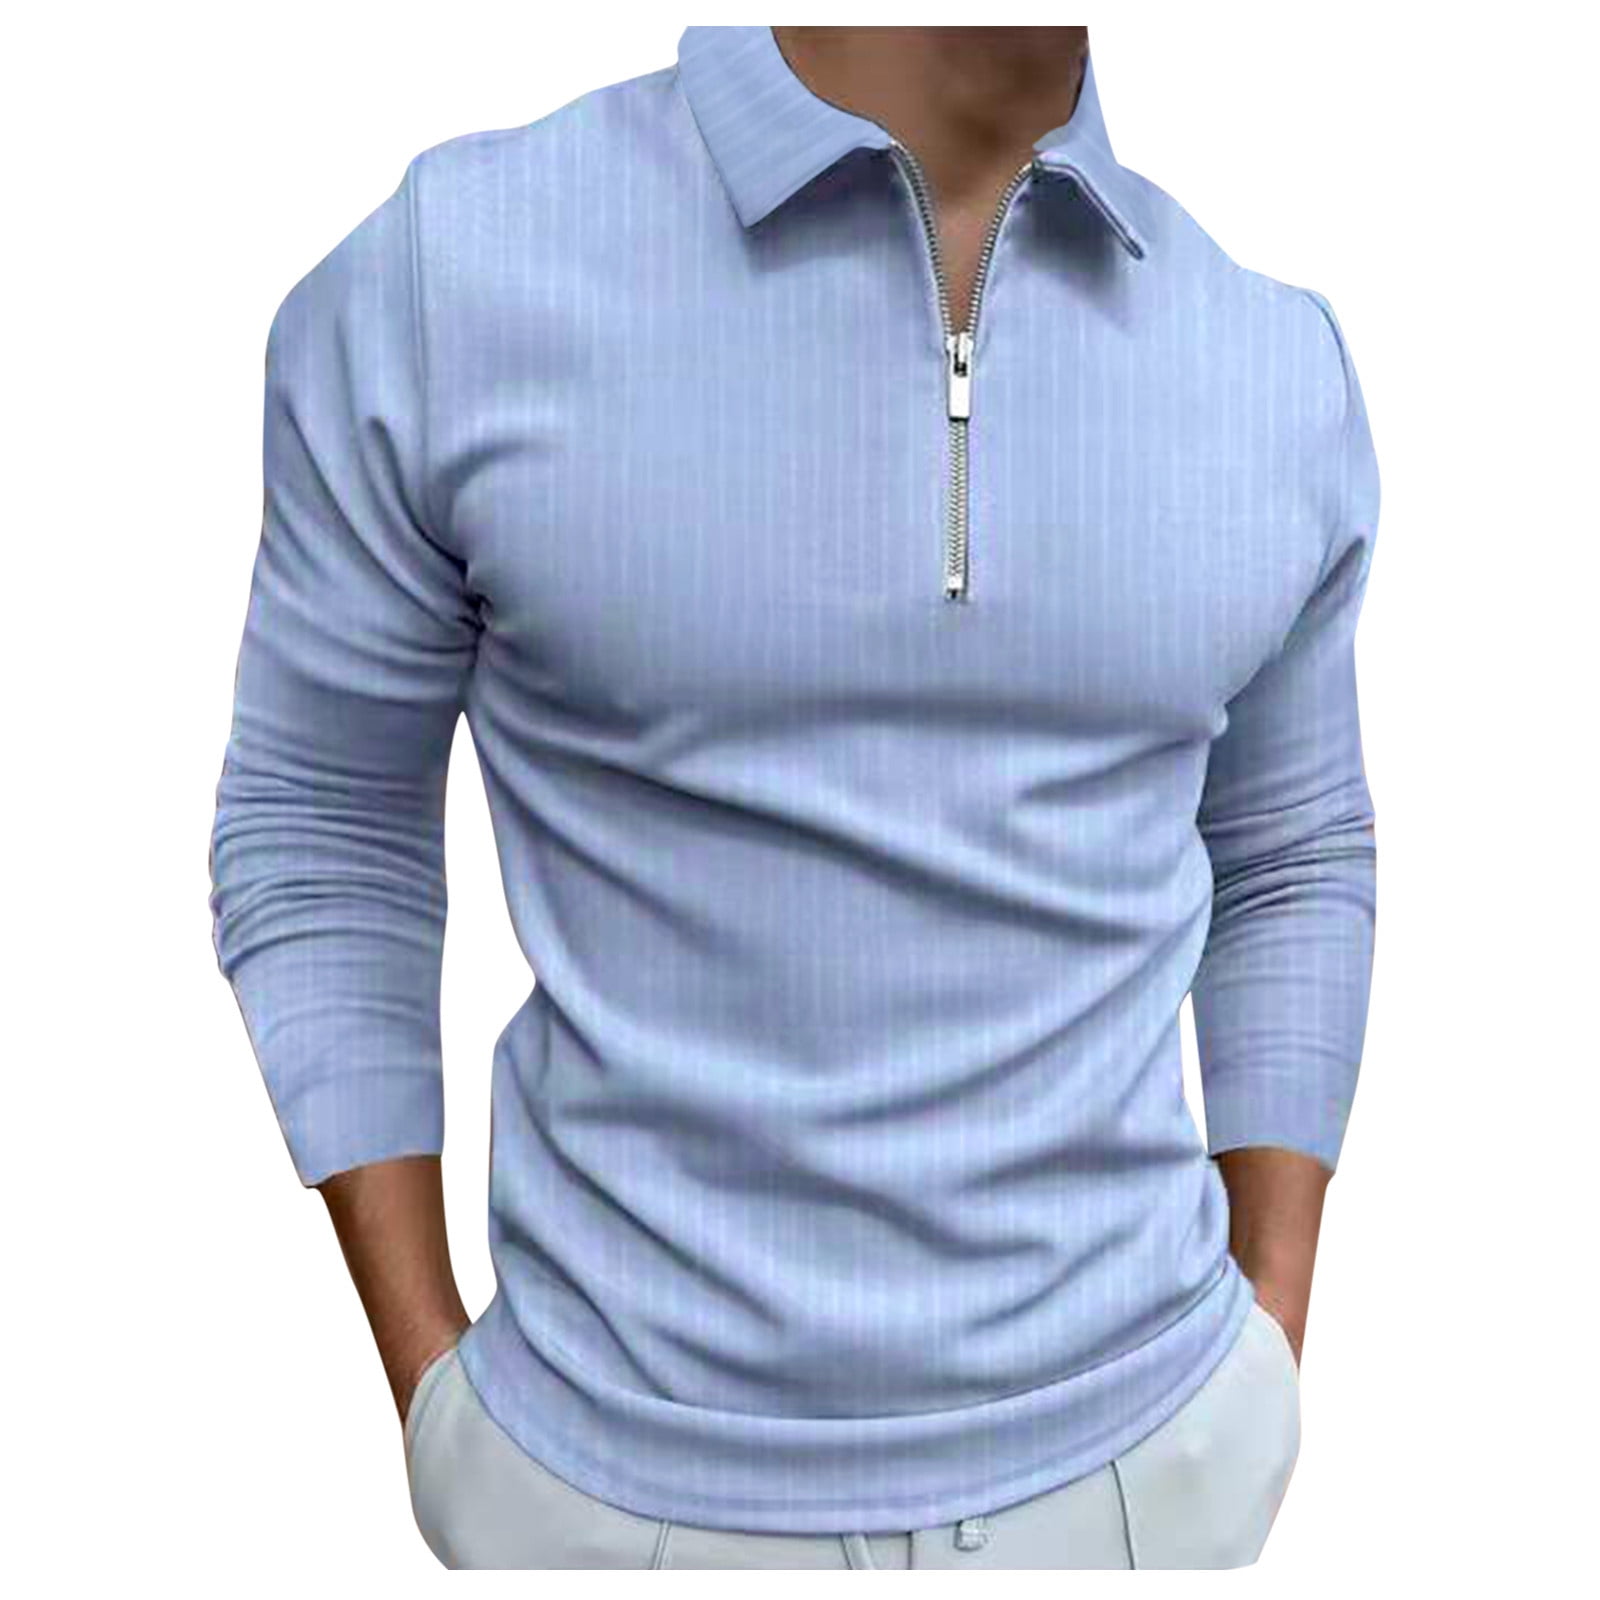 ketyyh-chn99 Grey Polo Sweatsuit Men's Long Sleeve Super Soft